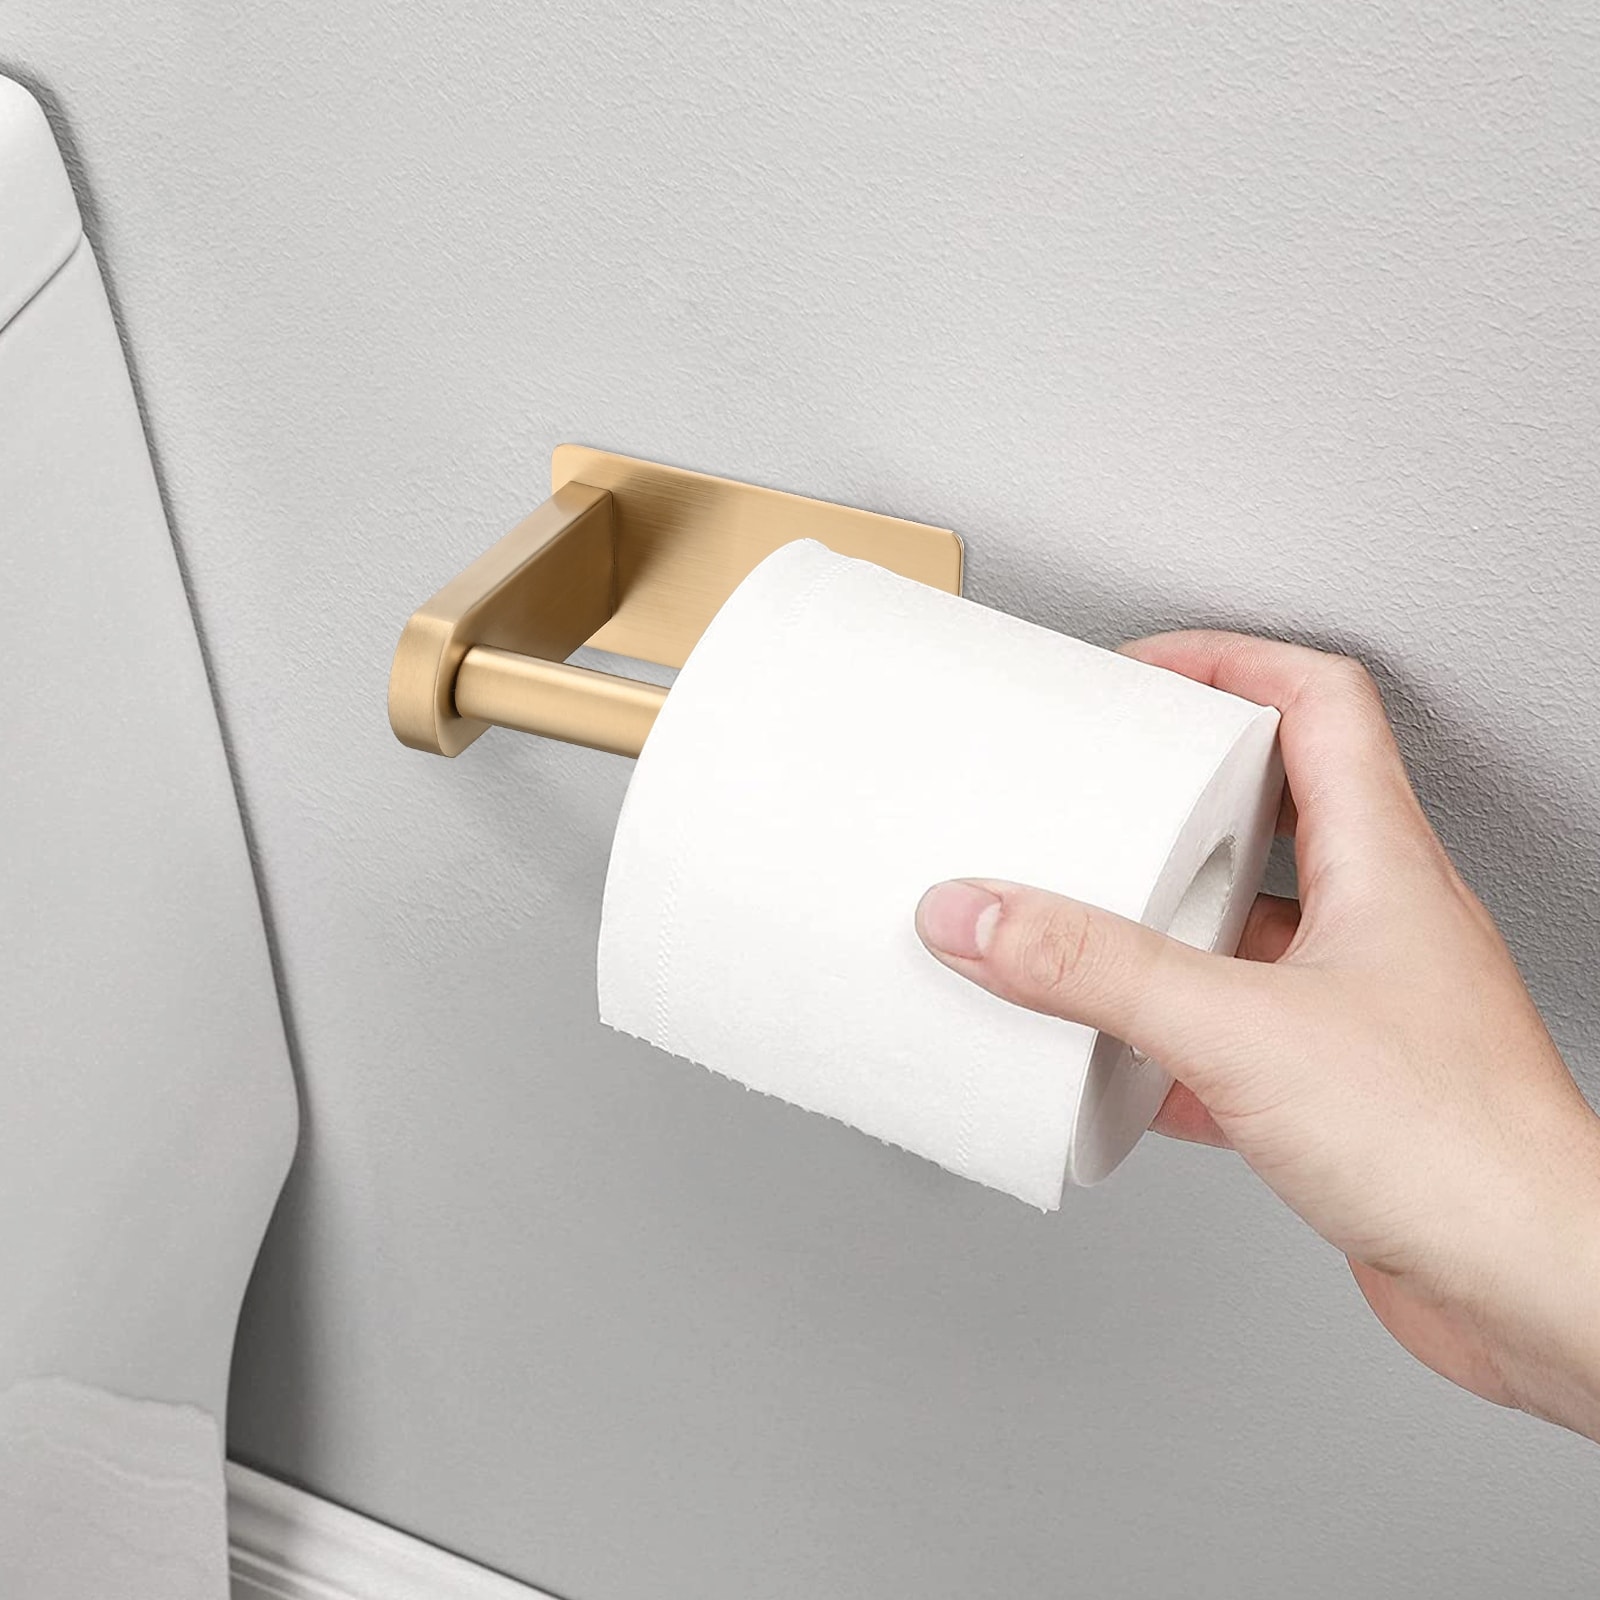 Kraus Elie Brushed Gold Wall Mount Single Post Toilet Paper Holder